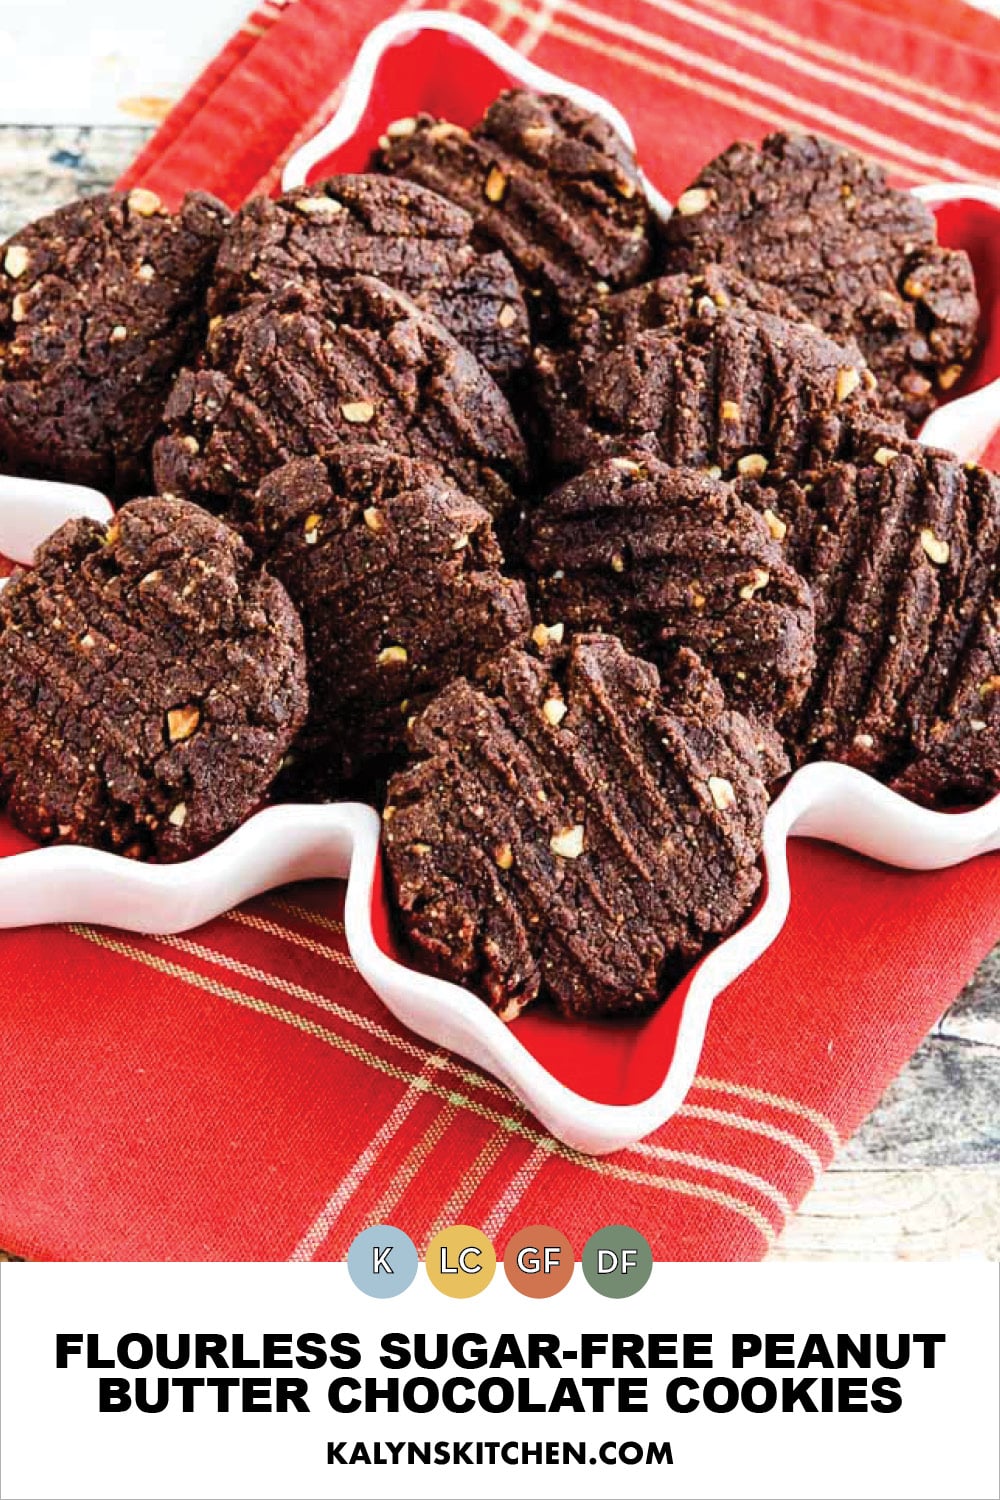 Pinterest image of Flourless Sugar-Free Peanut Butter Chocolate Cookies